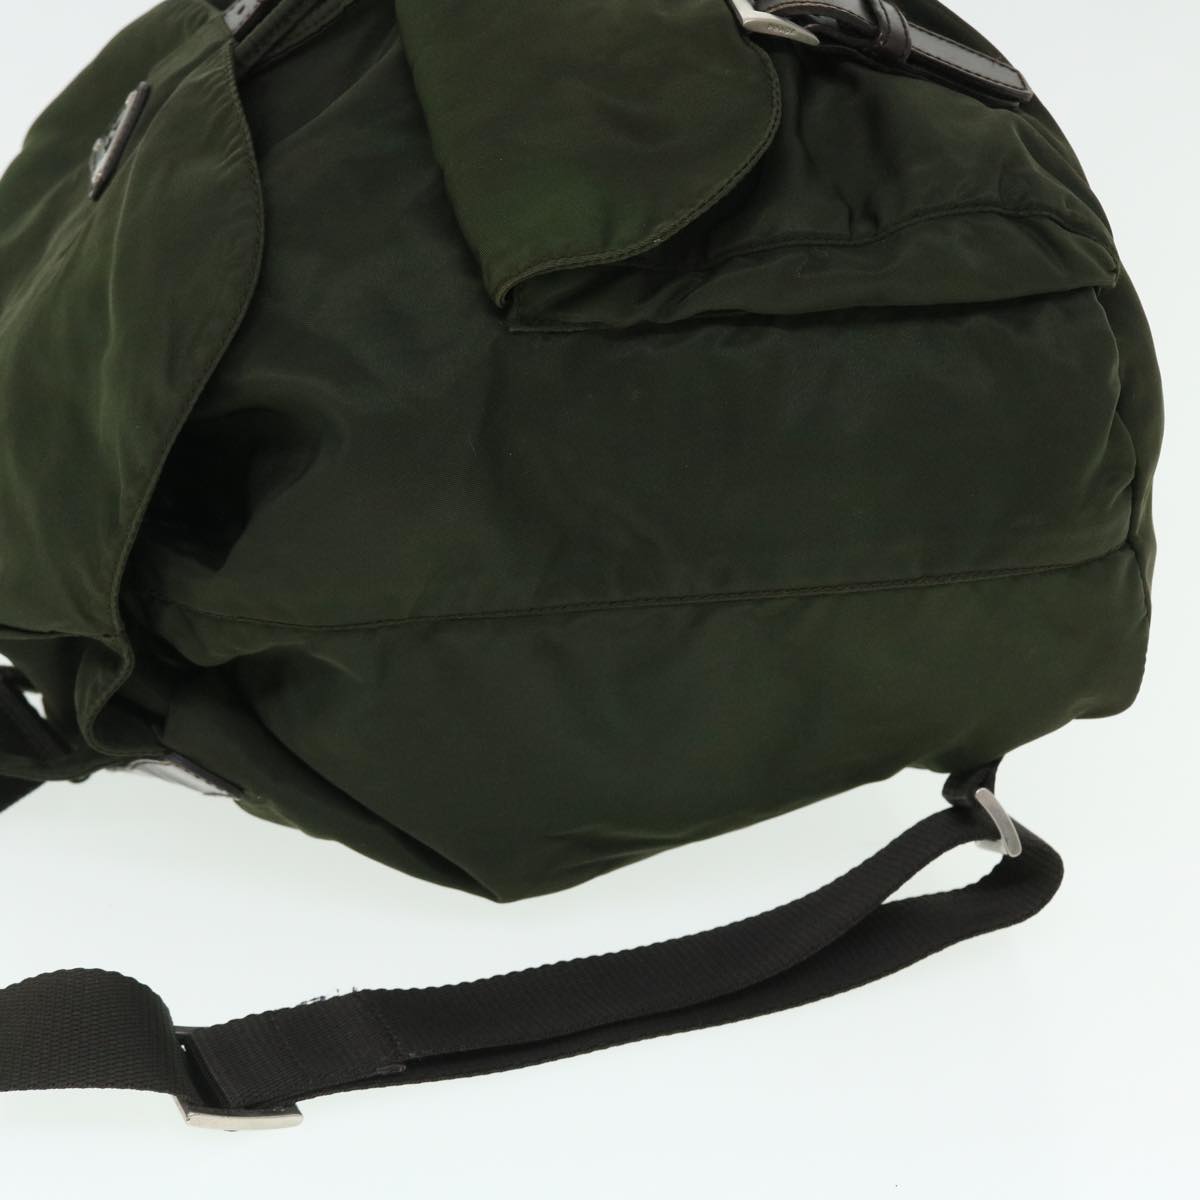 PRADA Backpack Nylon Khaki Auth bs7575